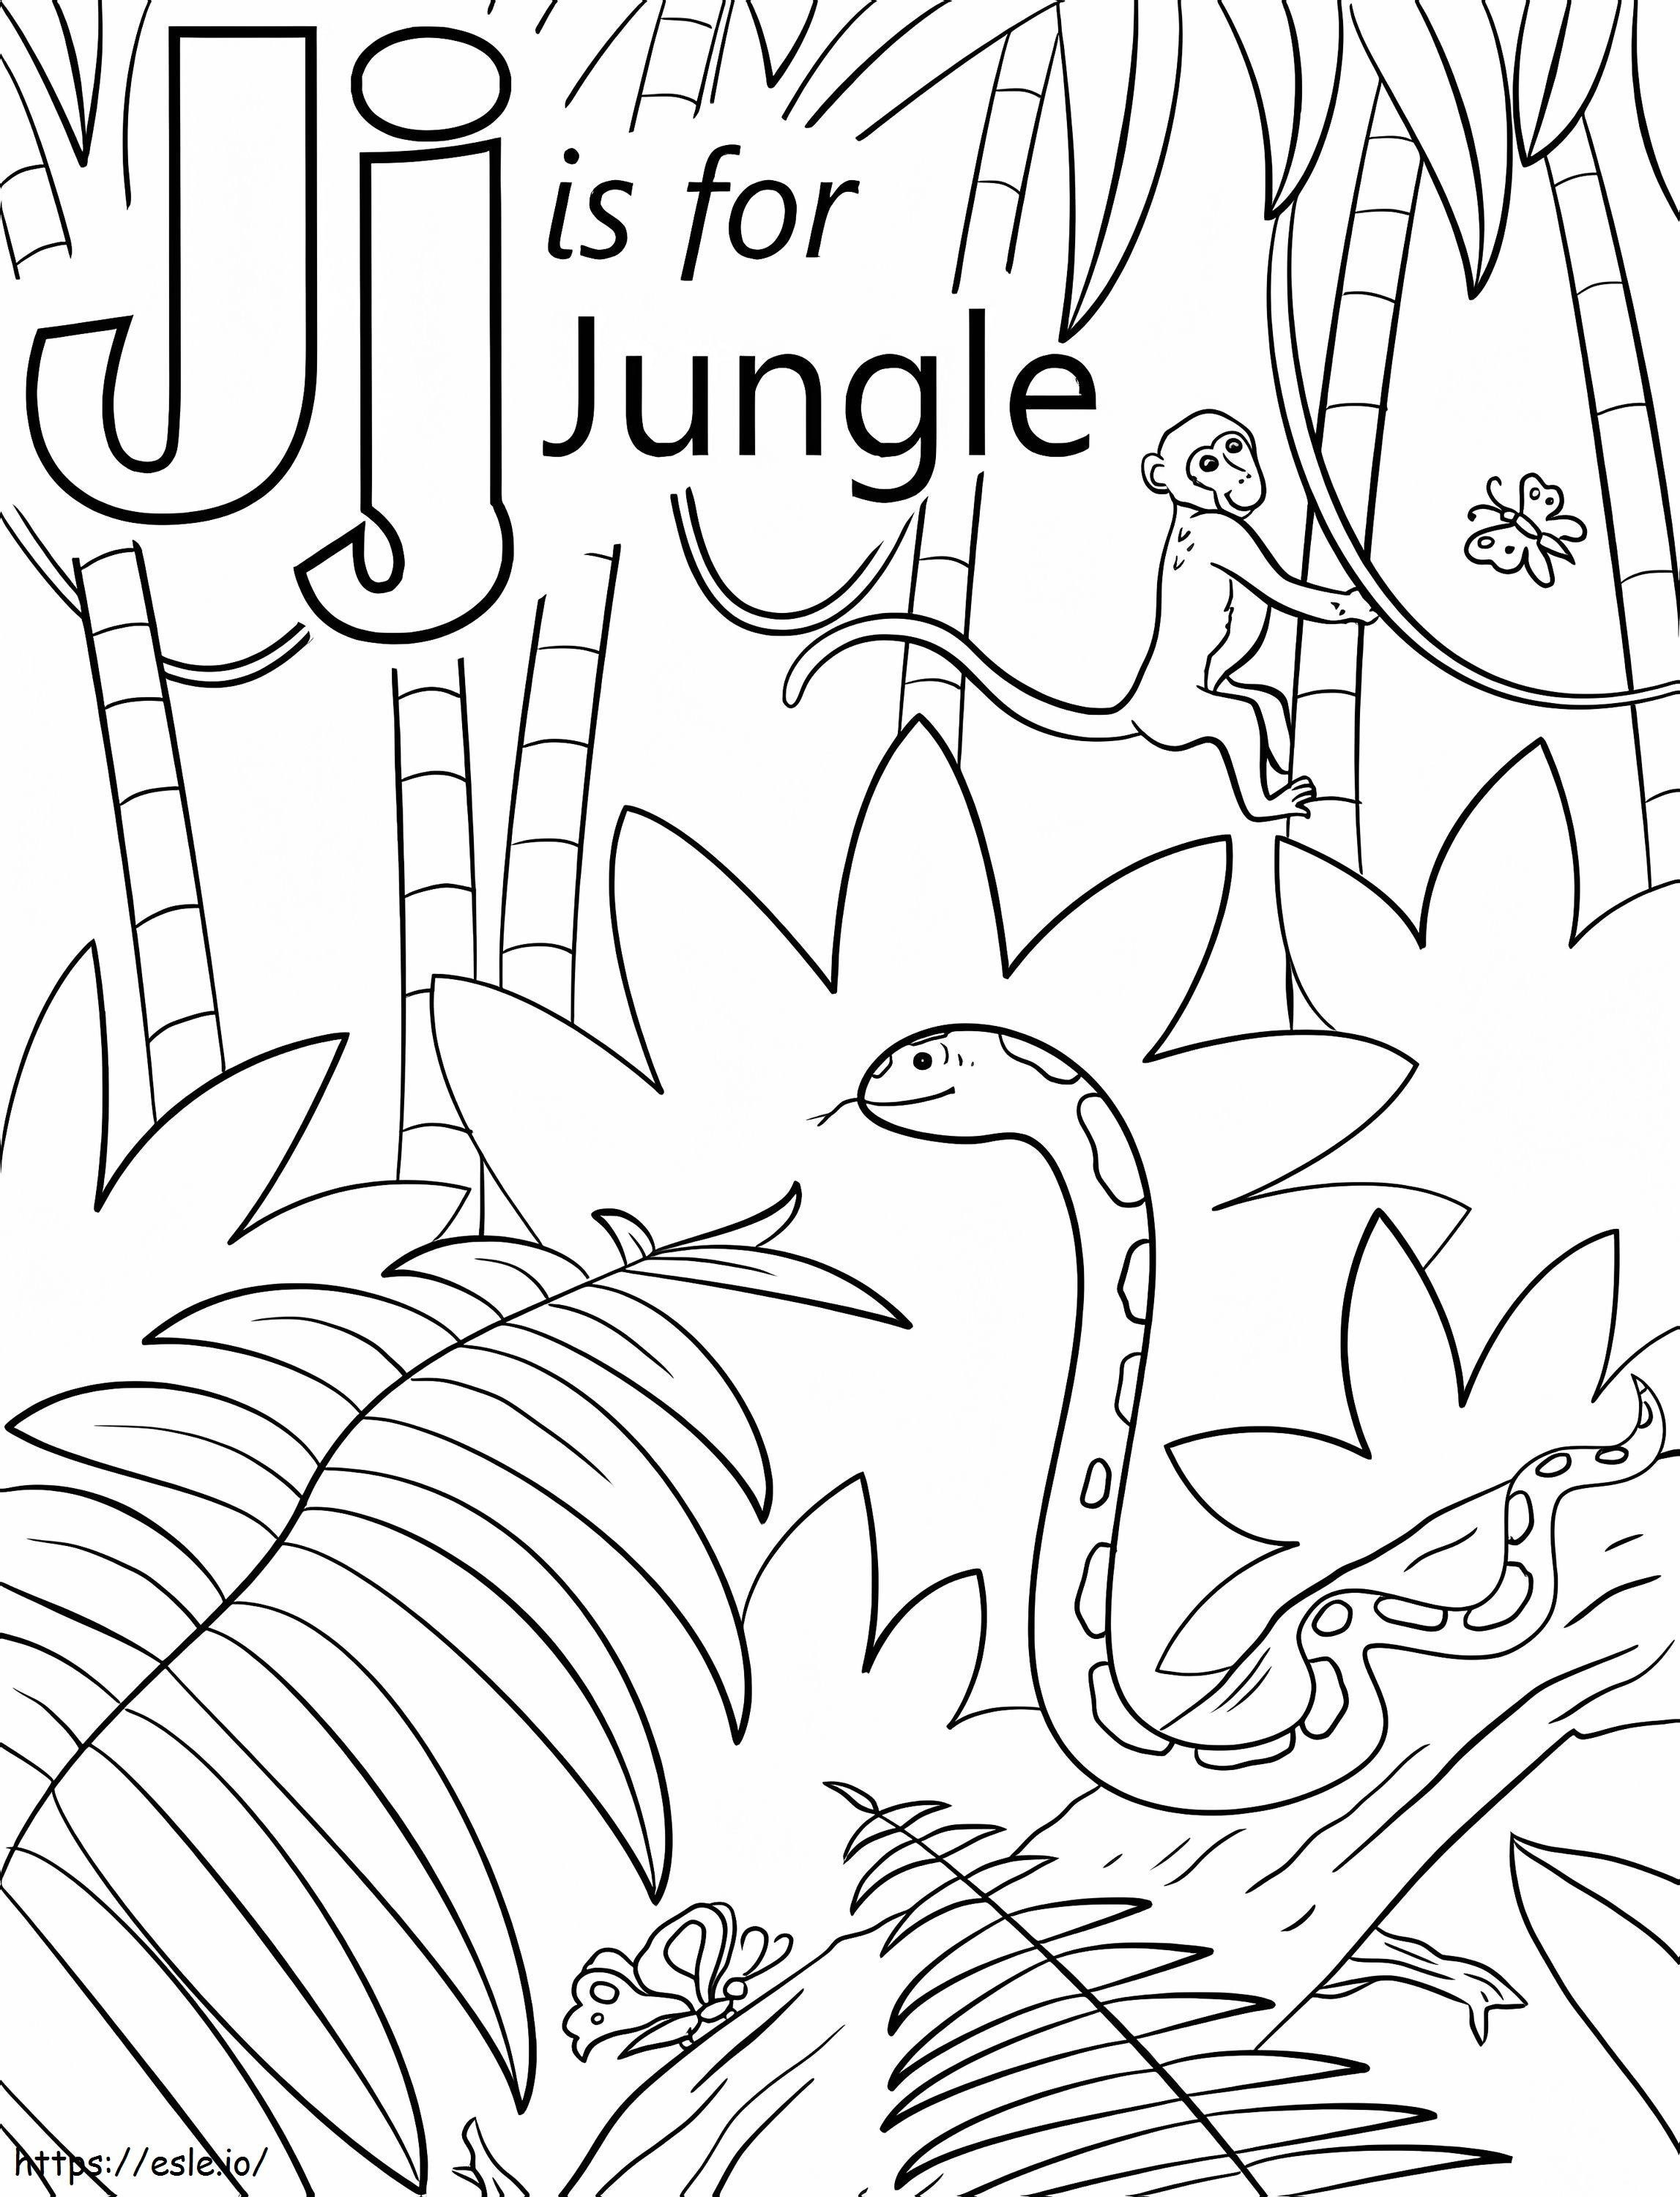 Jungle Letter J coloring page